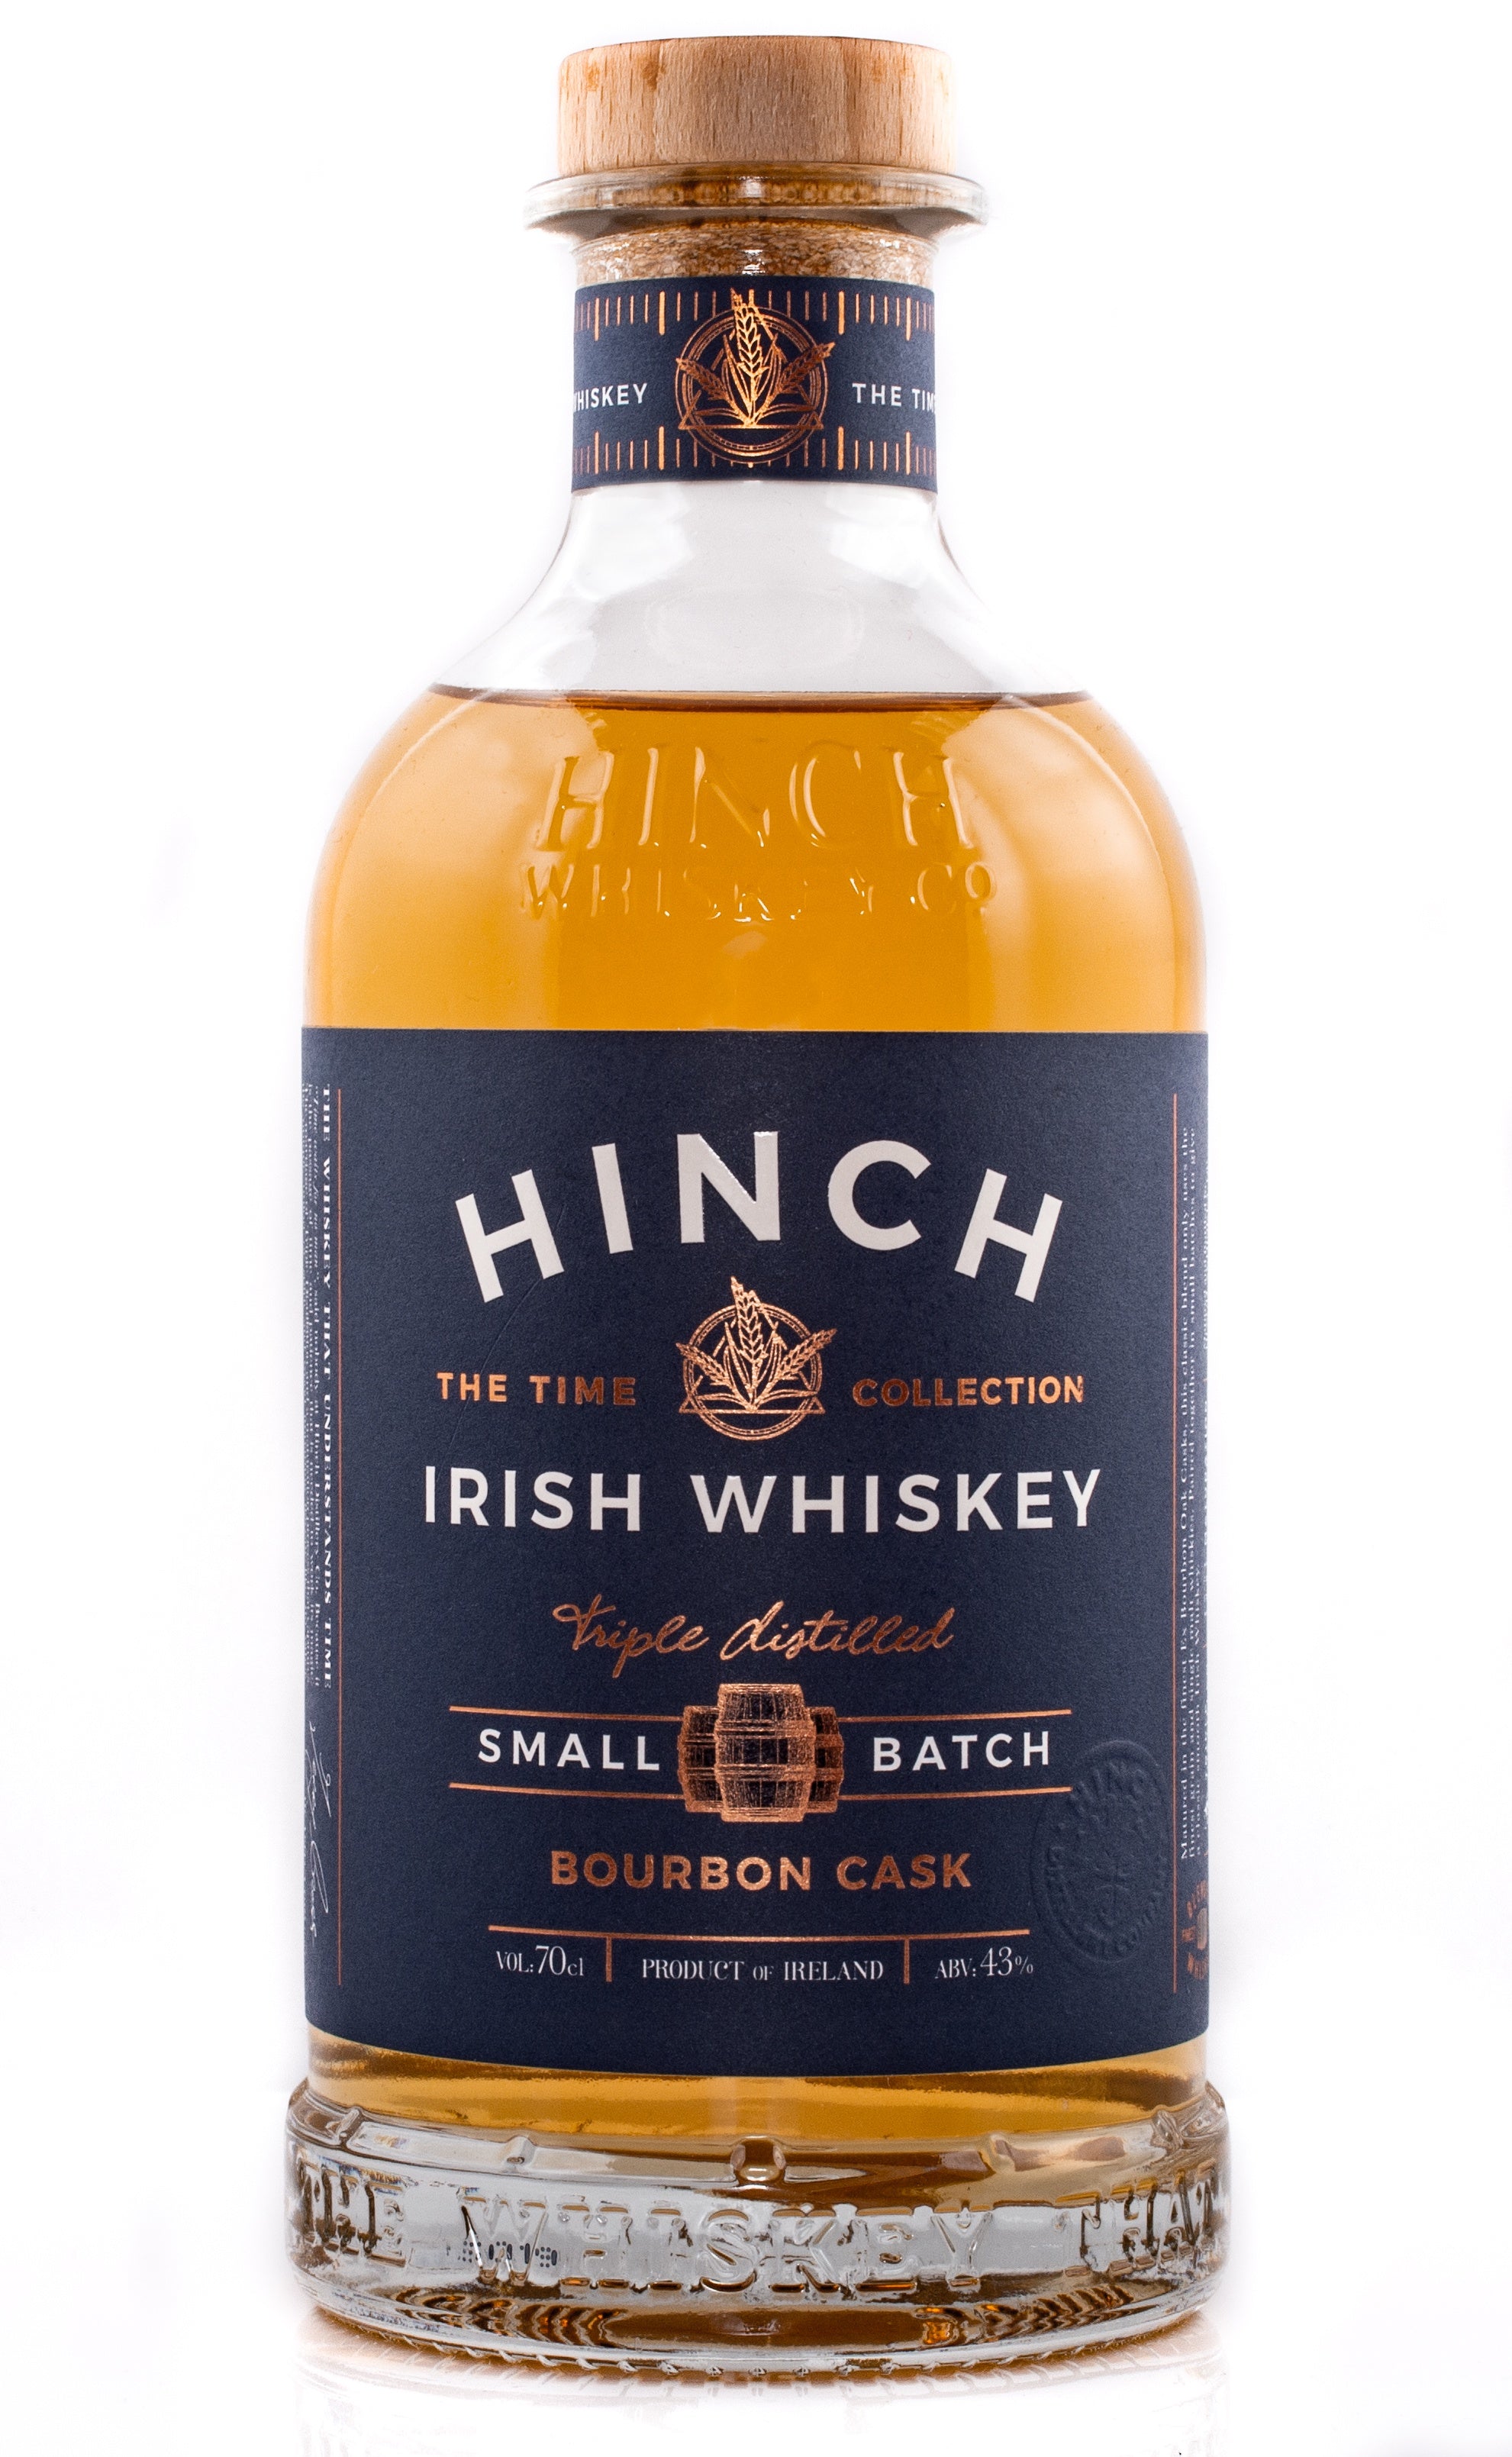 Hinch Small Batch Bourbon Cask 43% abv 70cl